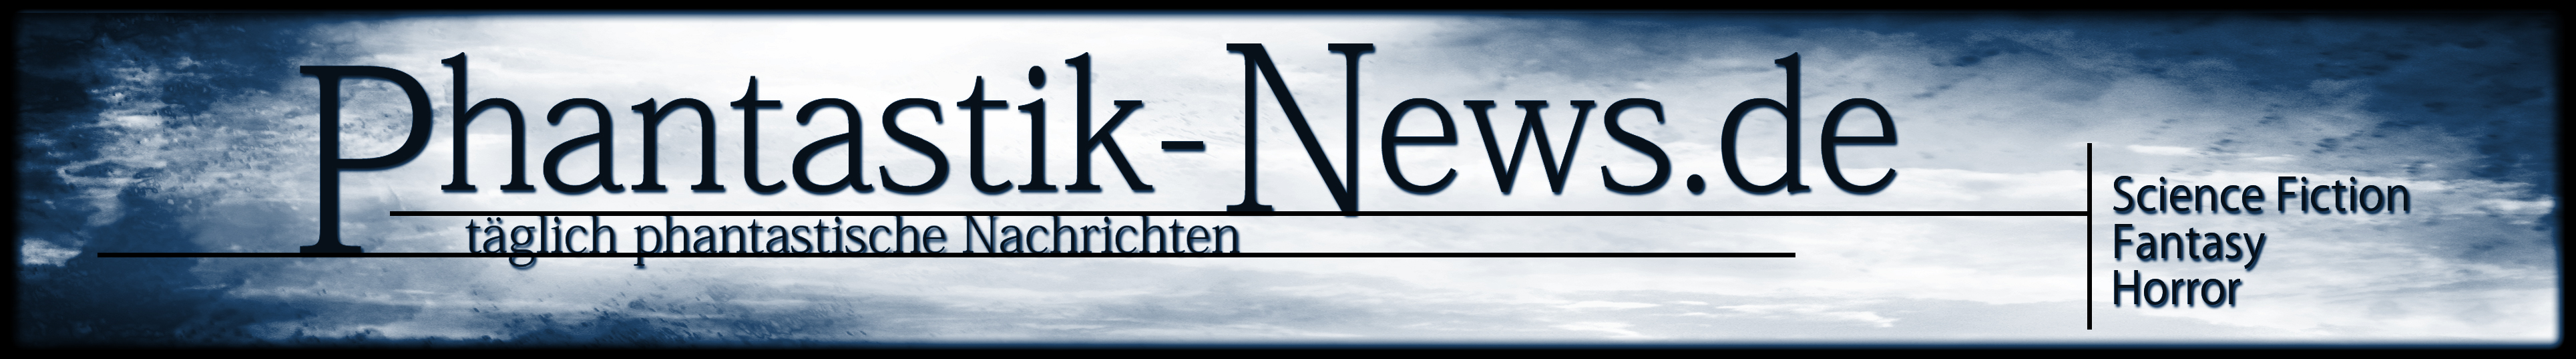 Phantastik-News.de